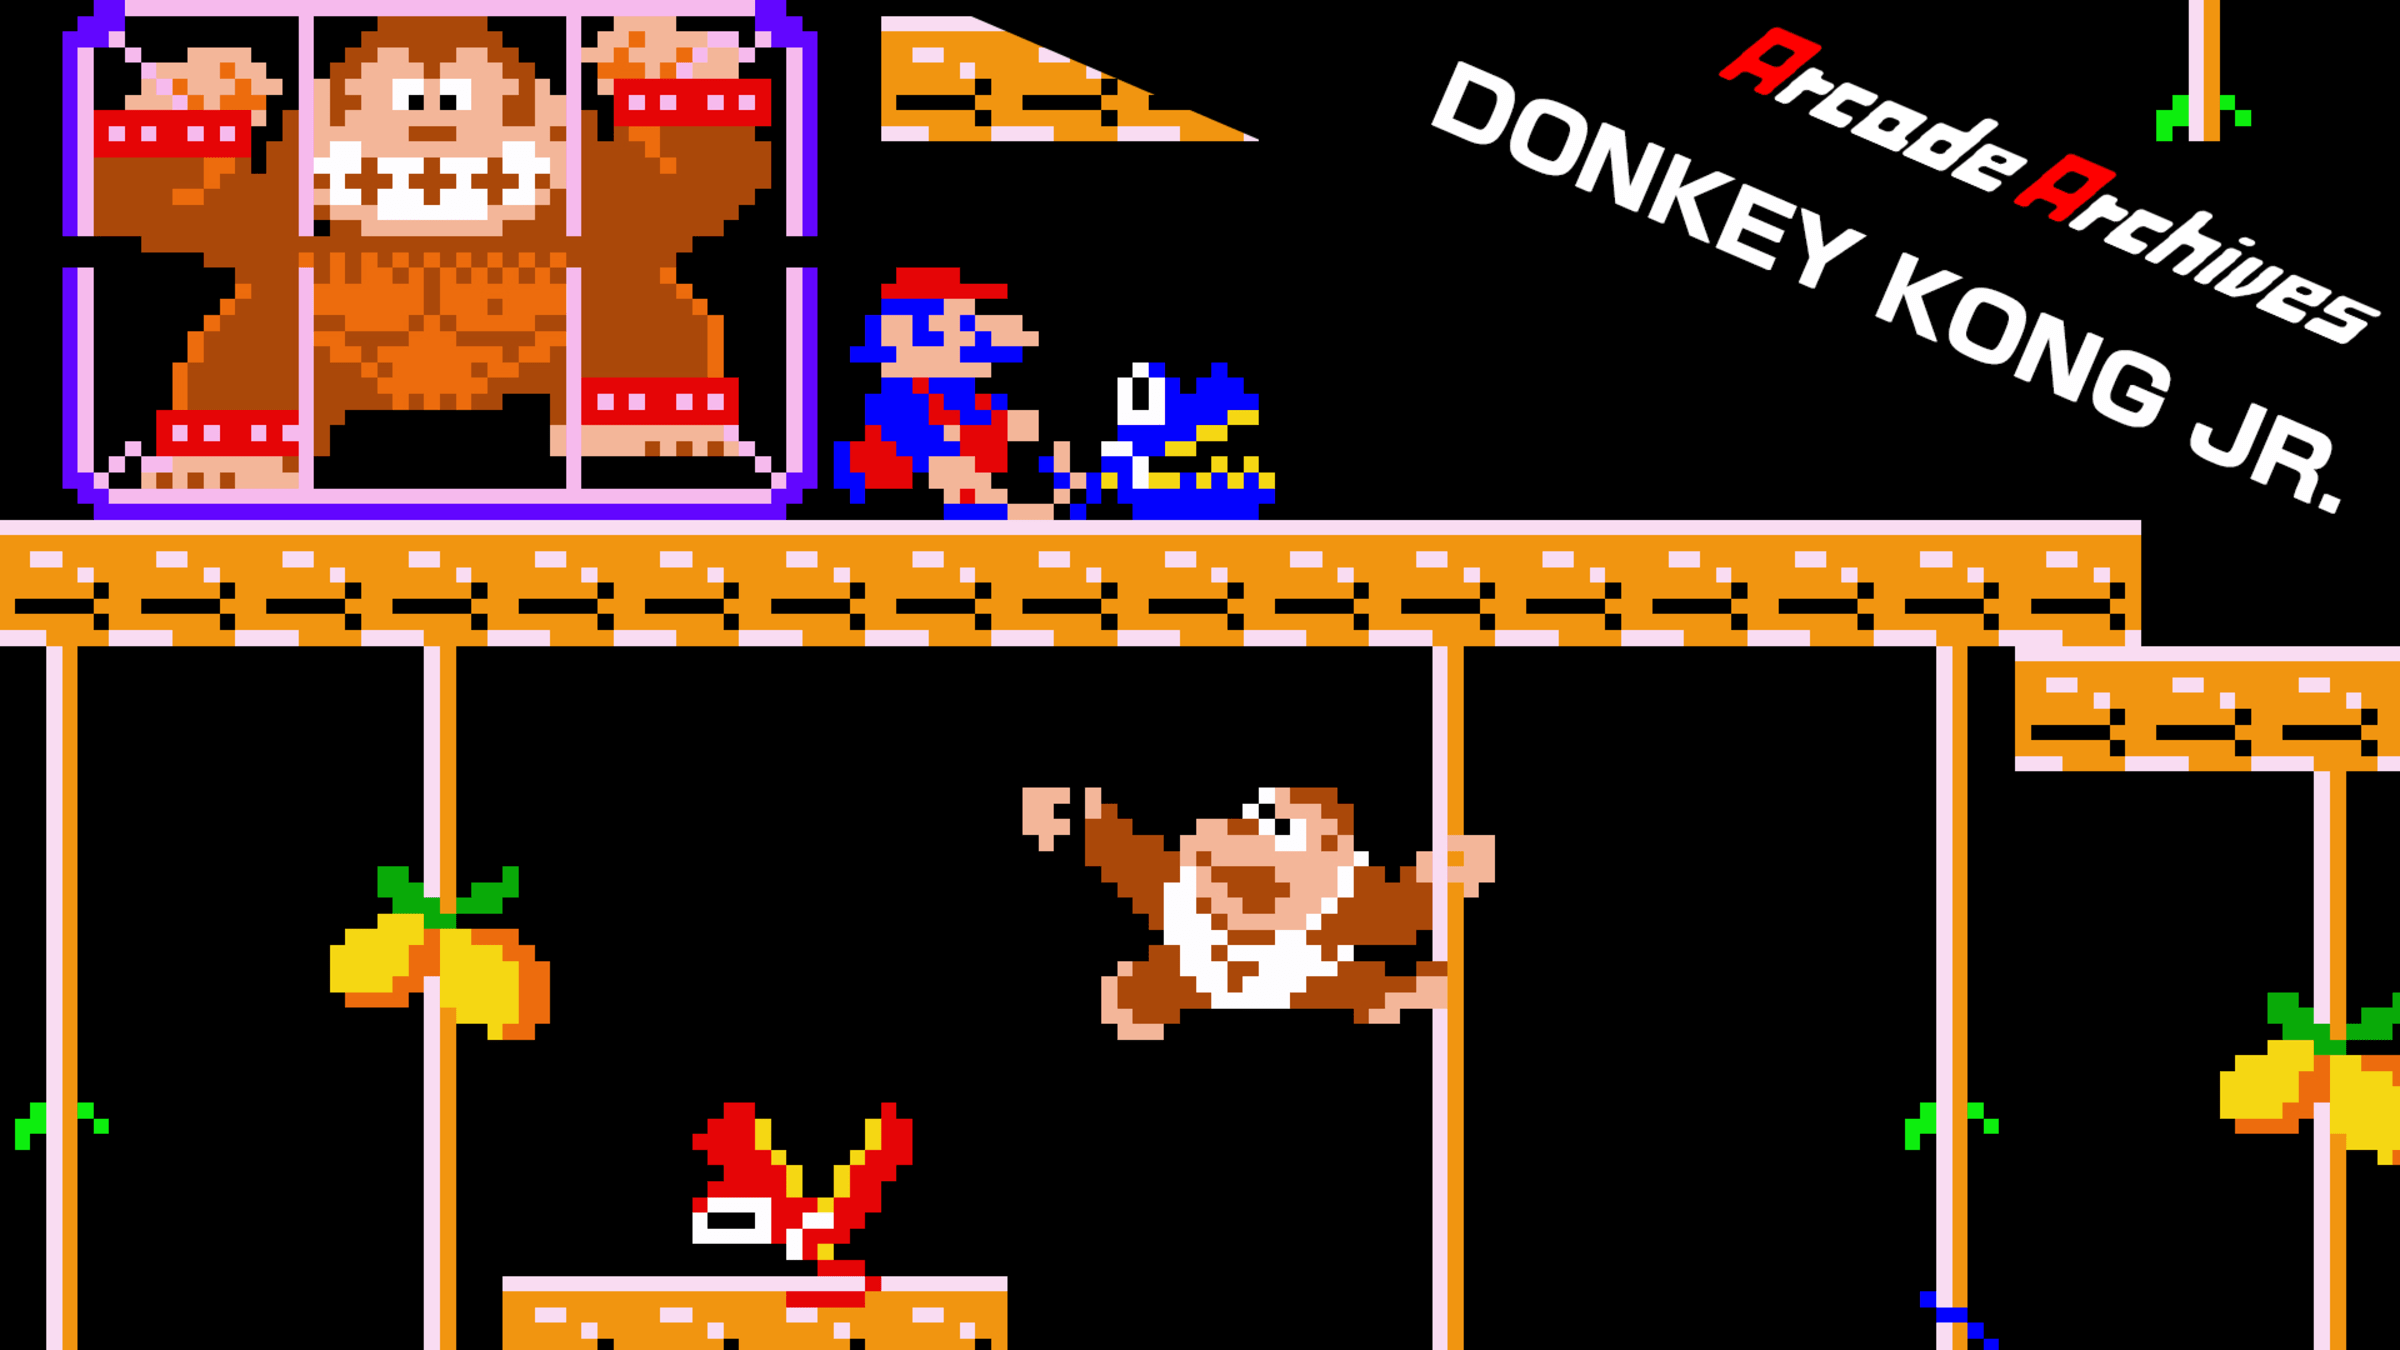 Arcade Archives DONKEY KONG JR. for Nintendo Switch - Nintendo